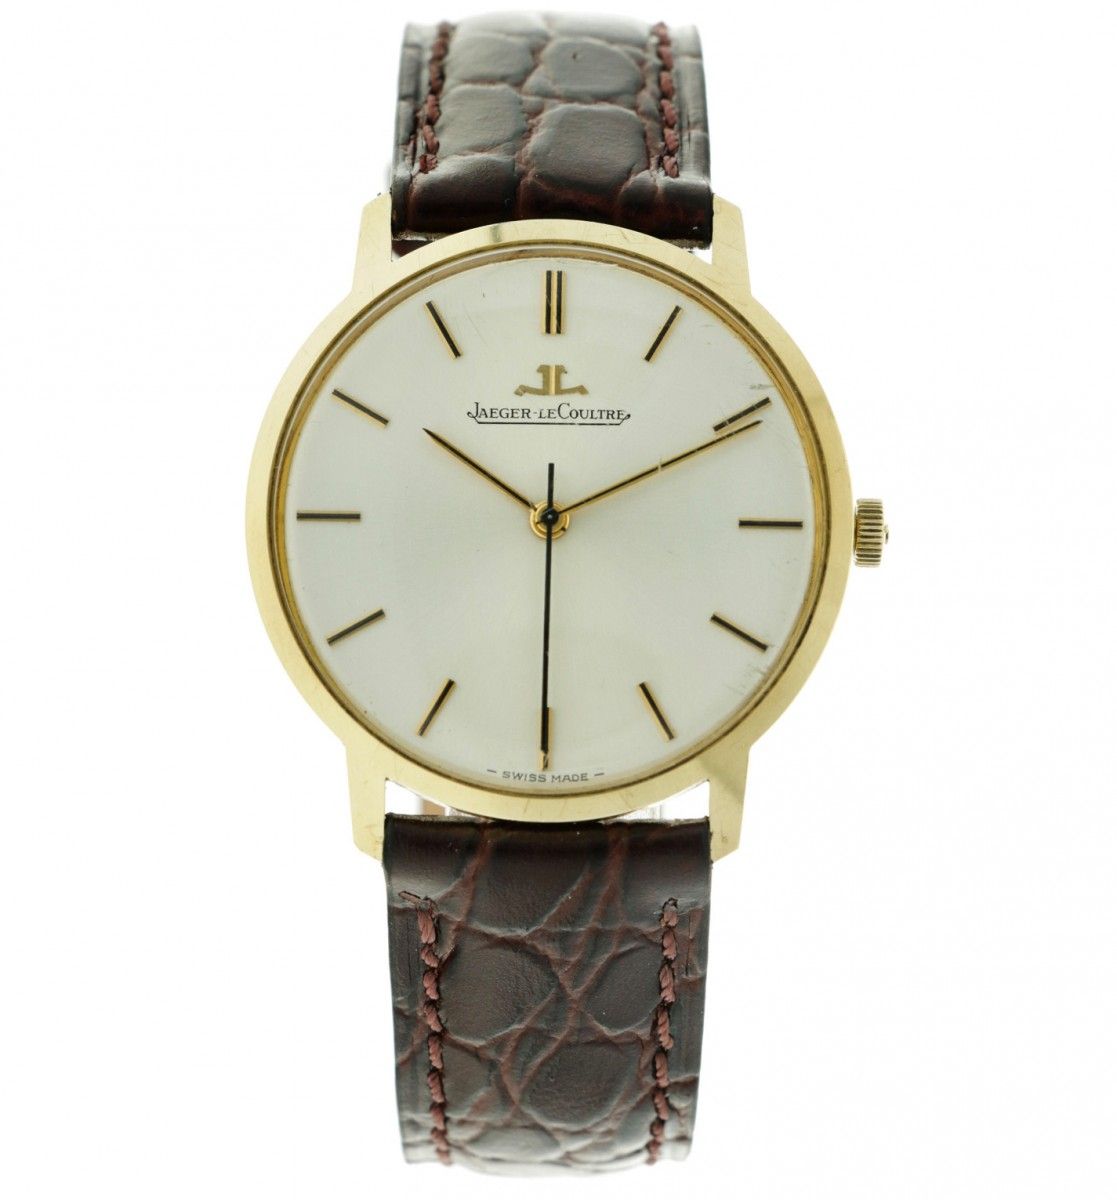 Jaeger-LeCoultre - Men's watch - apprx. 1970. Caja: oro amarillo (18 kt.) - corr&hellip;